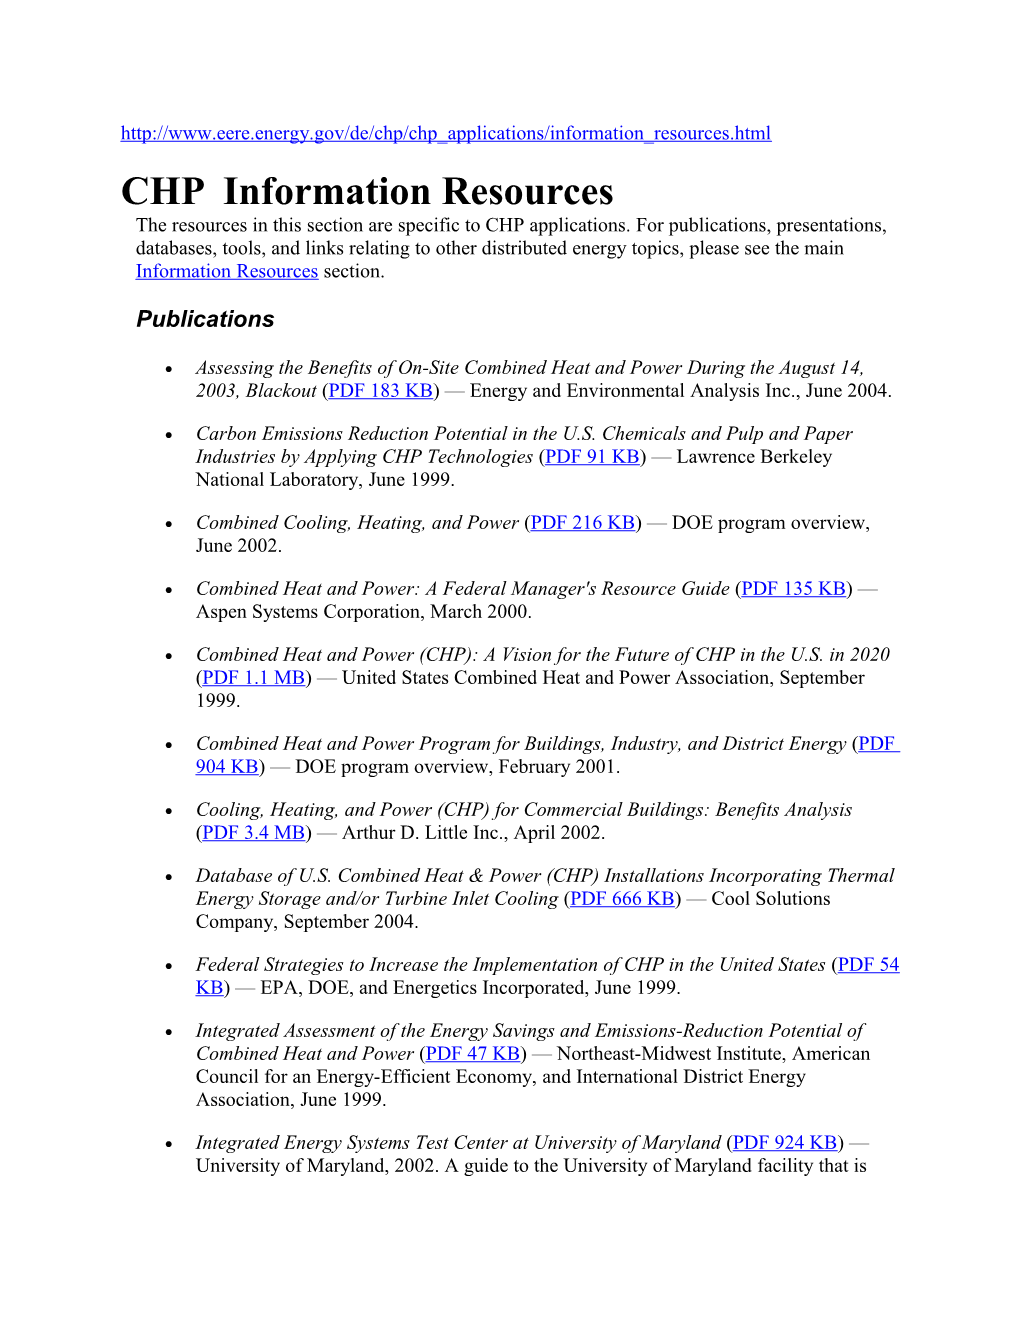 CHP Information Resources